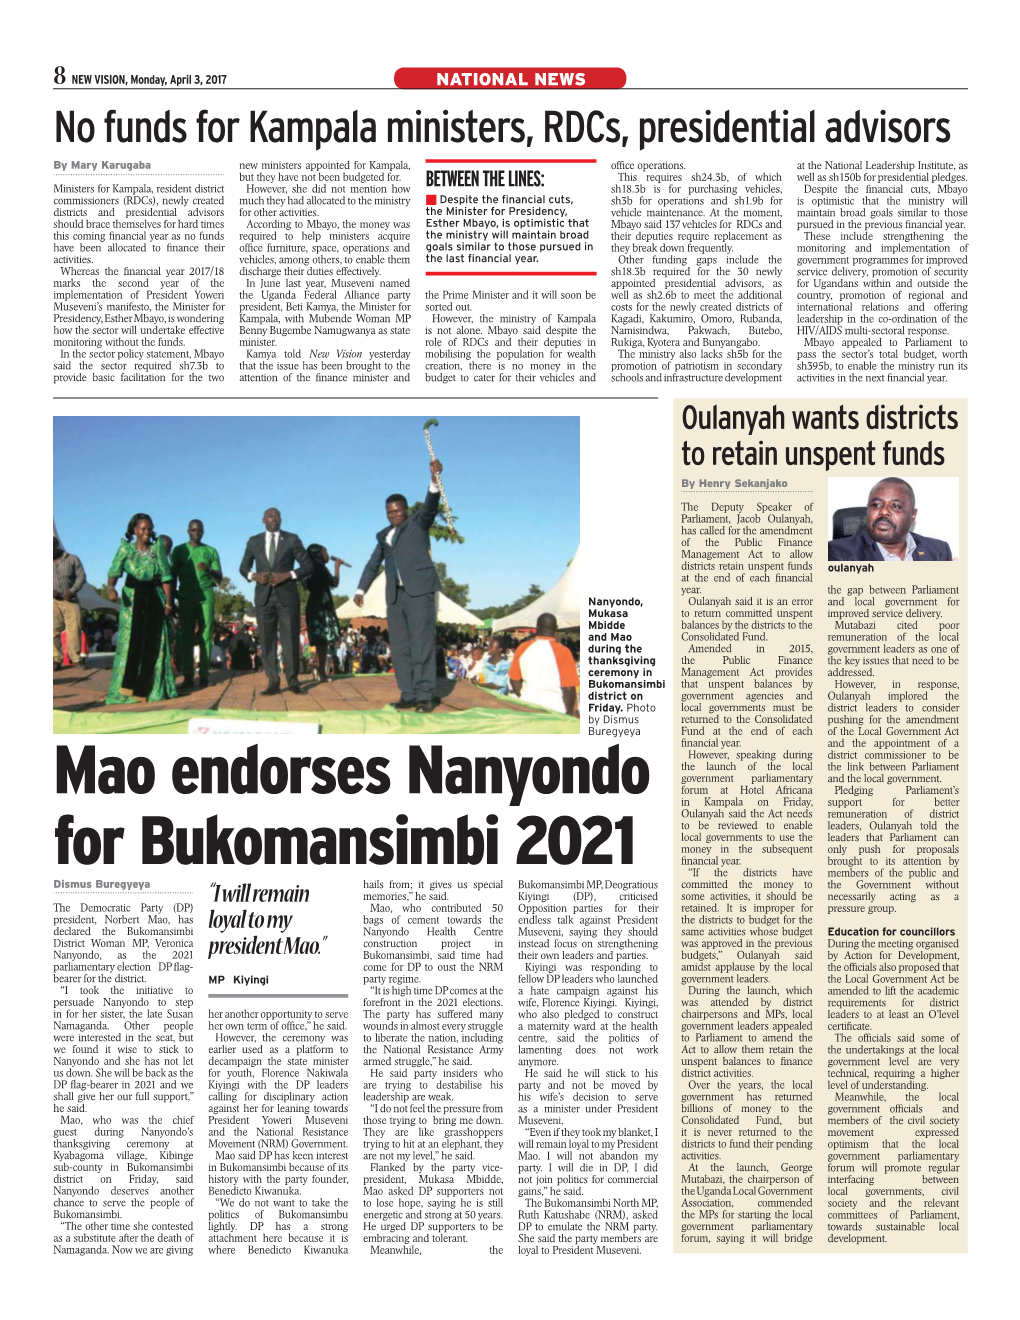 Mao Endorses Nanyondo for Bukomansimbi 2021